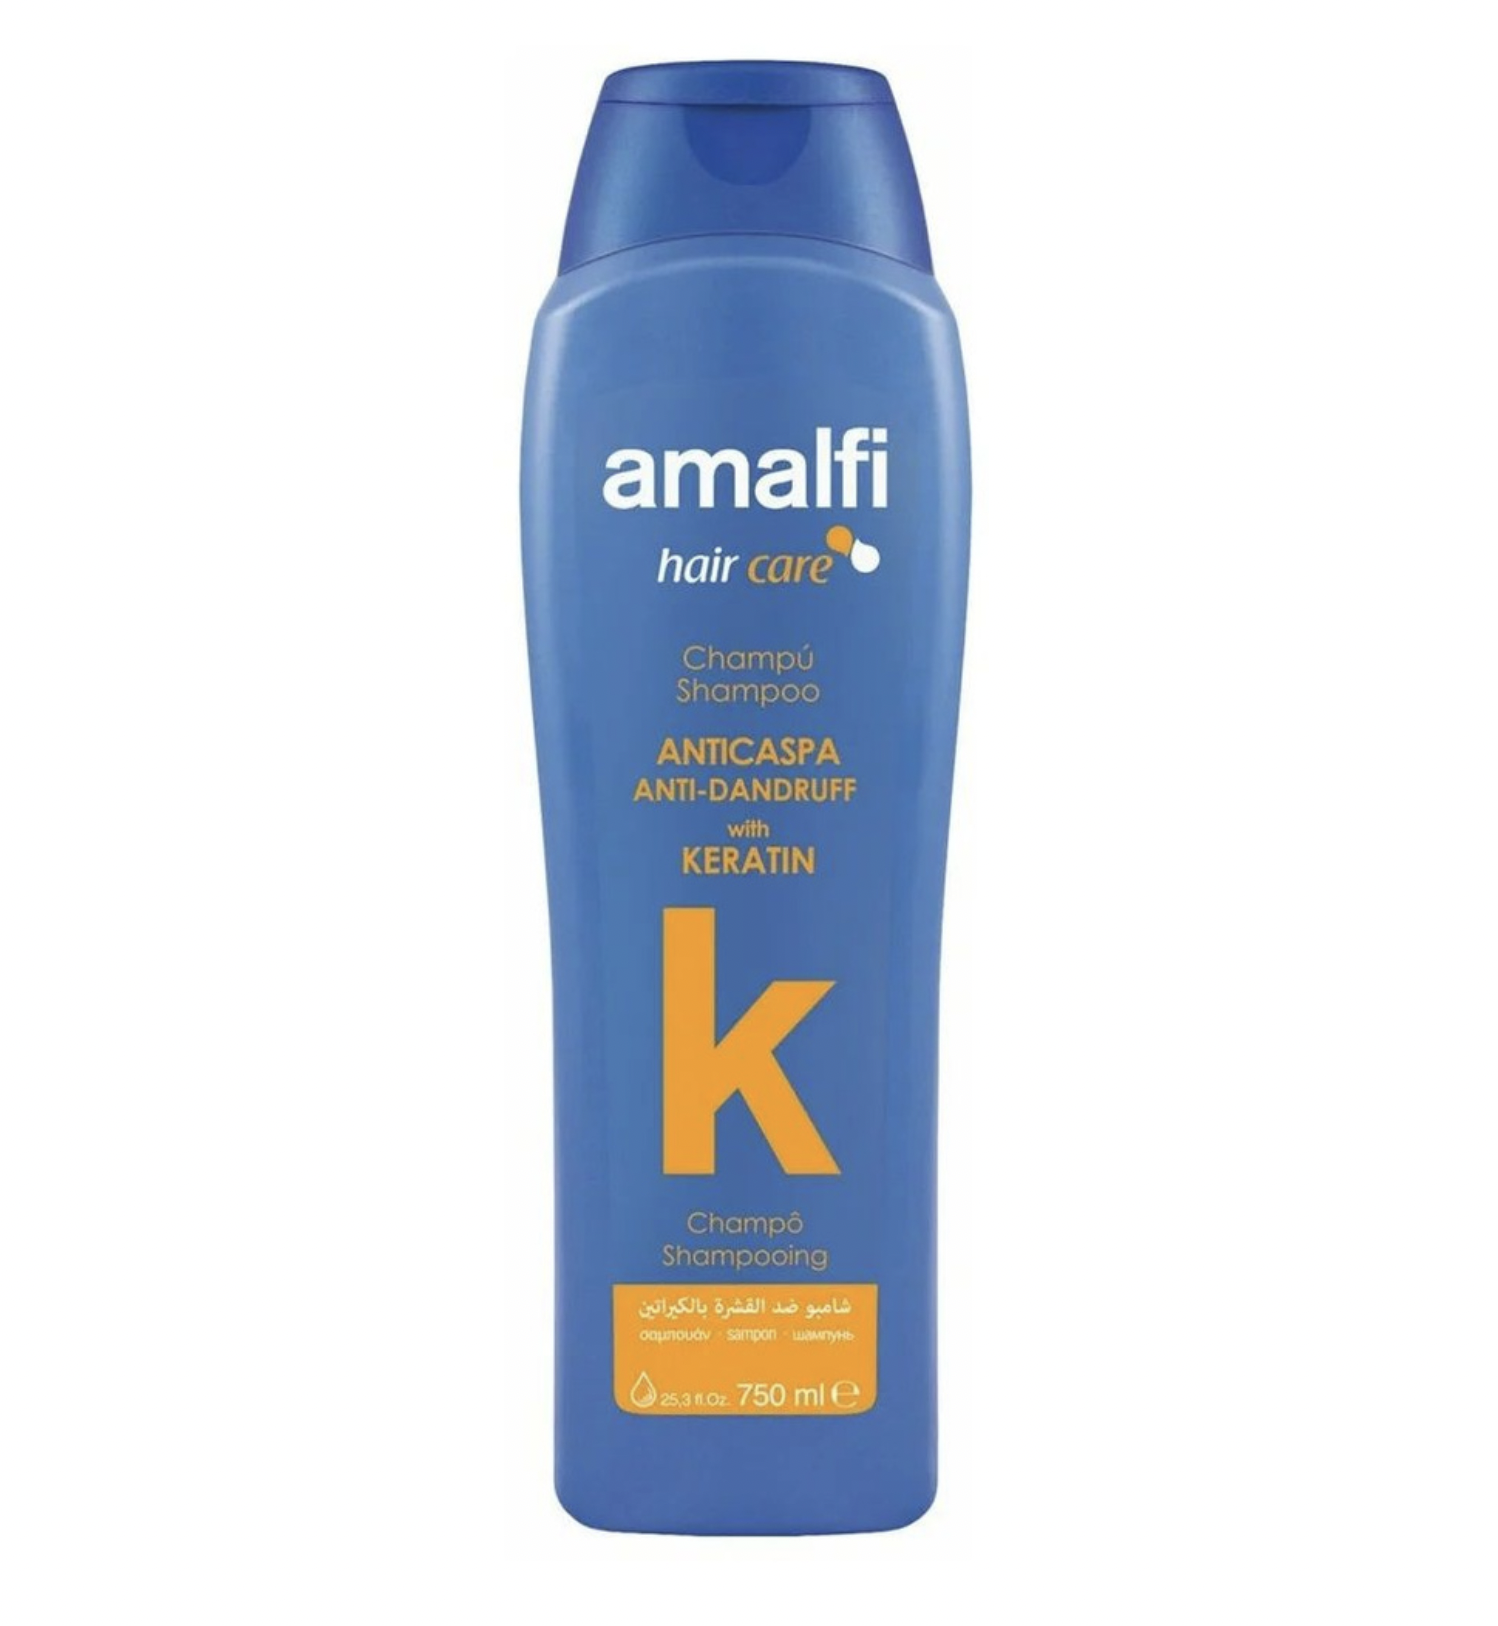   / Amalfi hair care -    Anti-dandruff with Keratin 750 